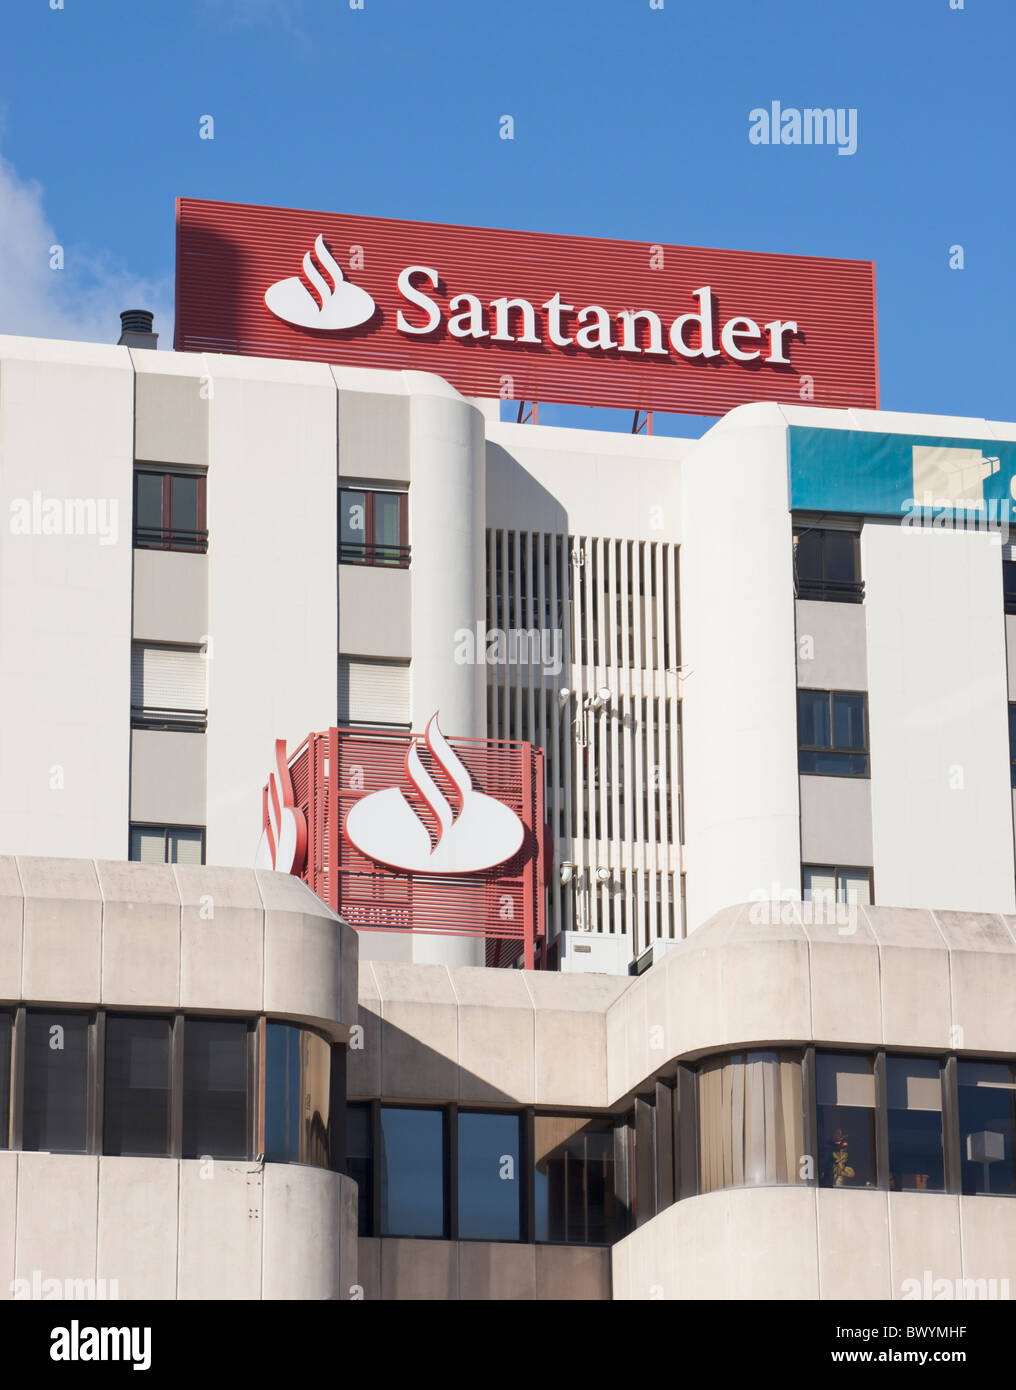 Branch of Santander bank in Malaga, Spain. Stock Photo